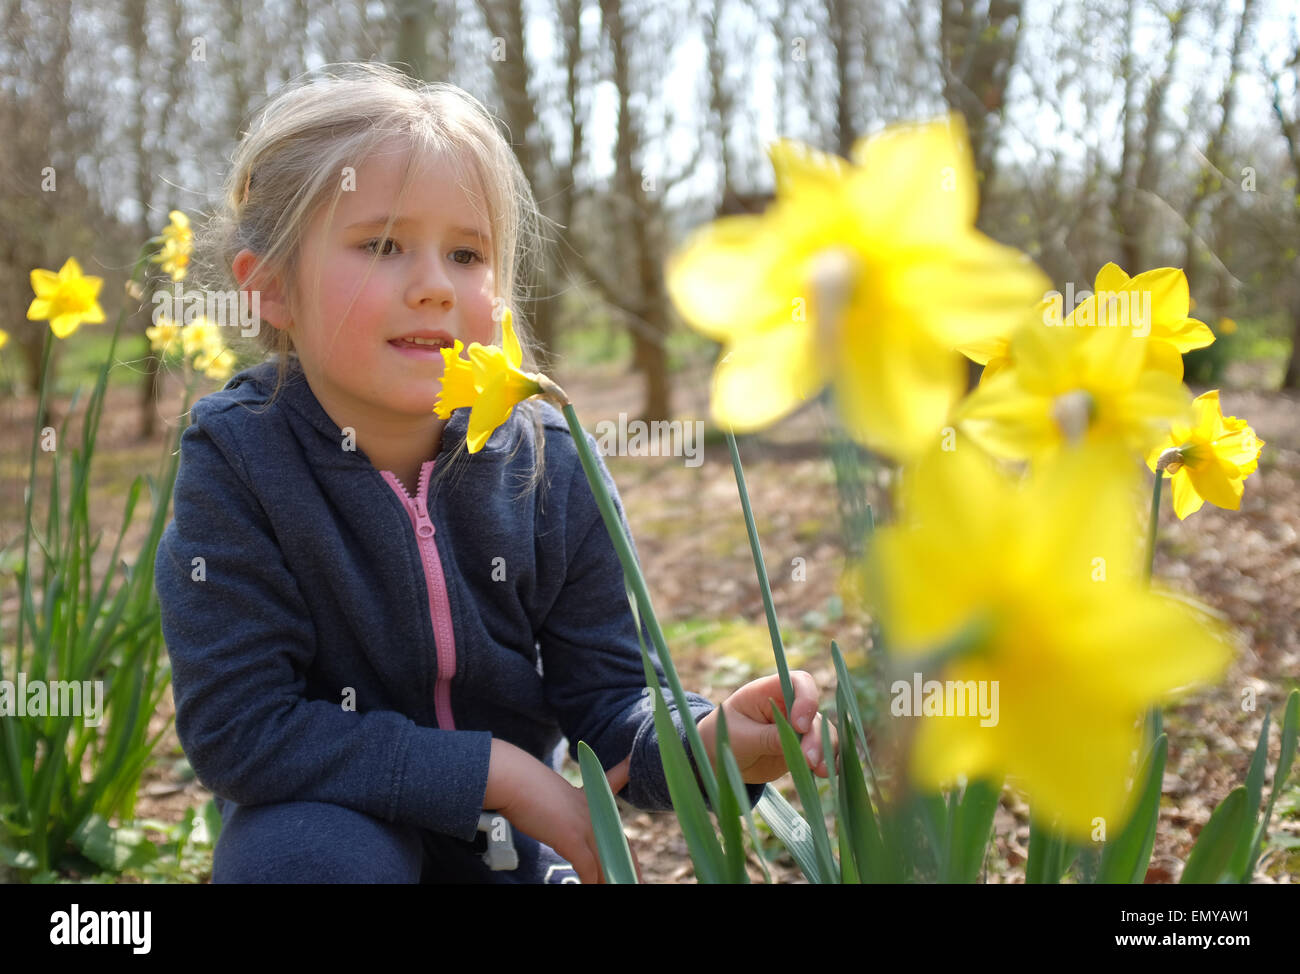 Young Girl smelling flowers jonquilles au printemps Banque D'Images